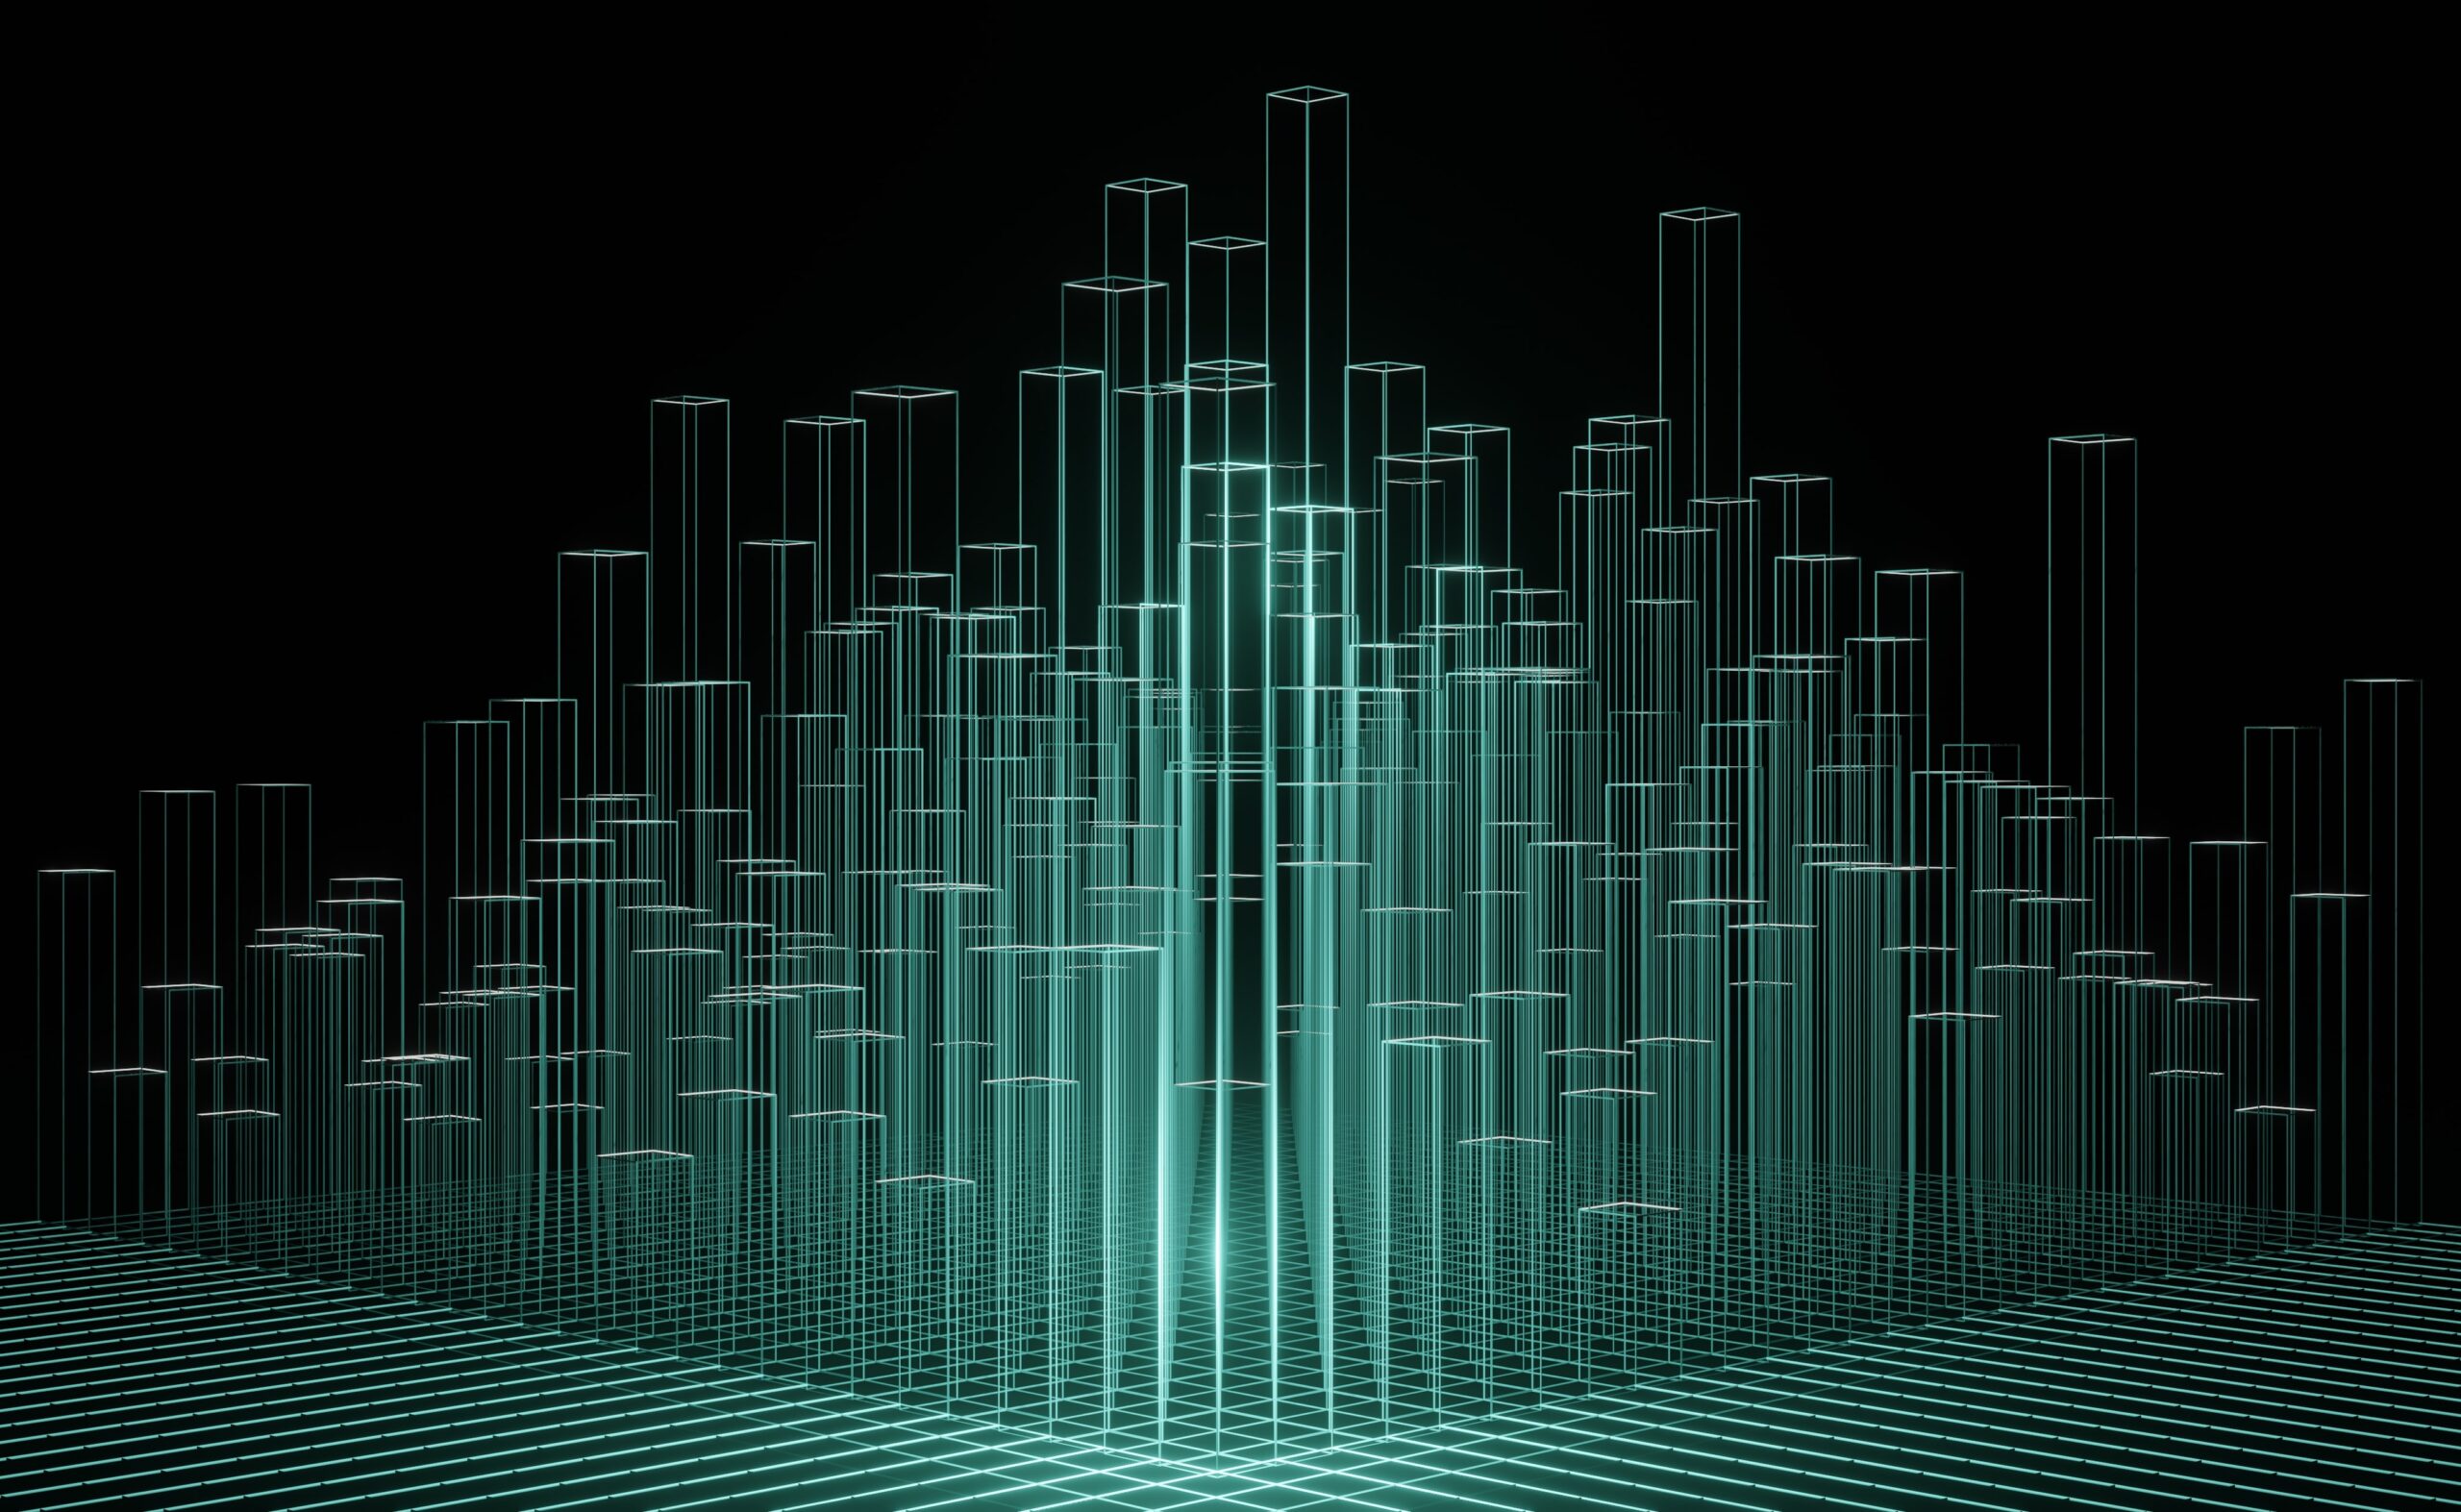 Lights resembling a city block of skyscrapers